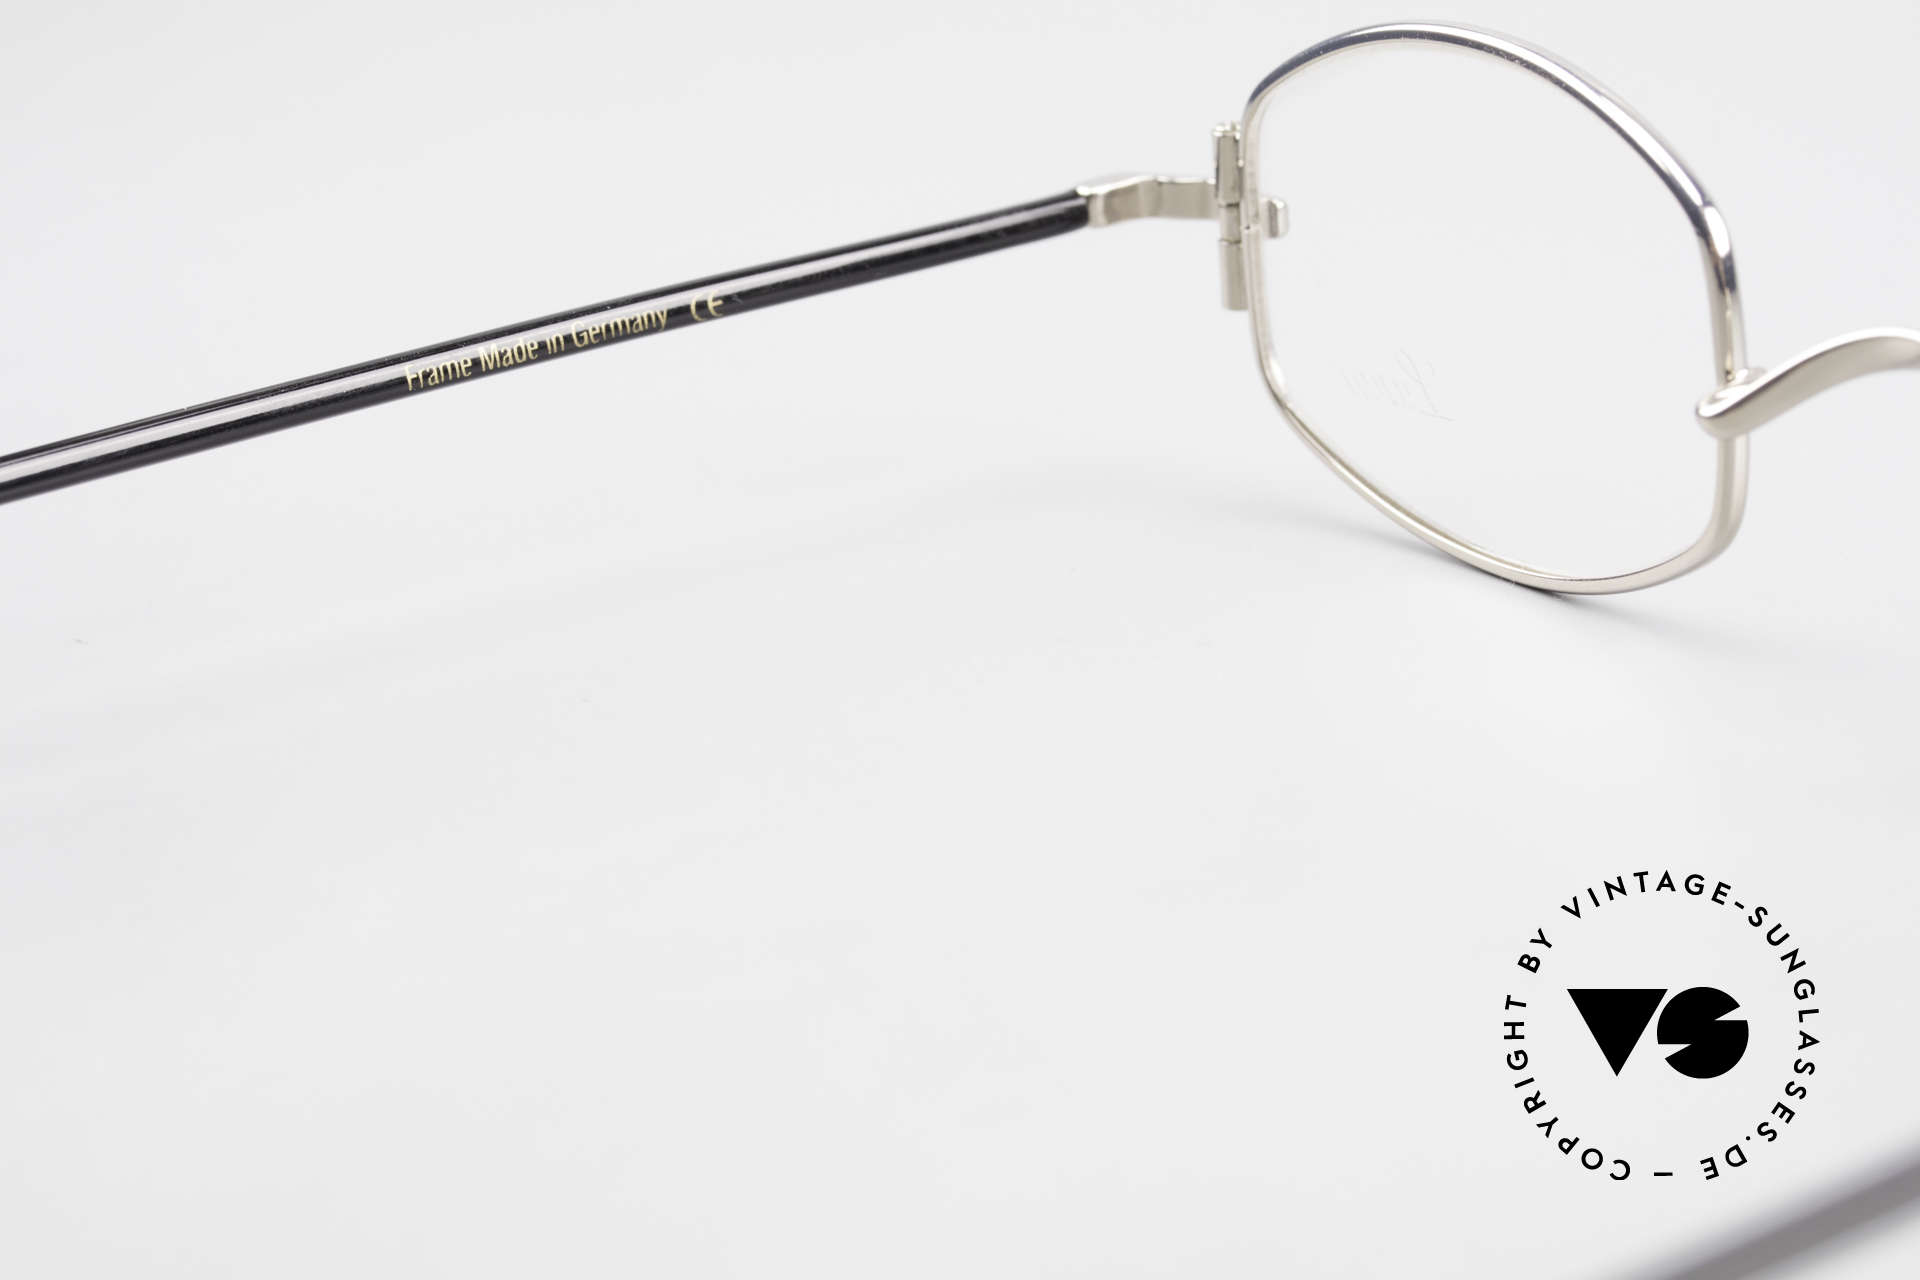 Lunor XA 03 No Retro Lunor Glasses Vintage, Size: medium, Made for Men and Women